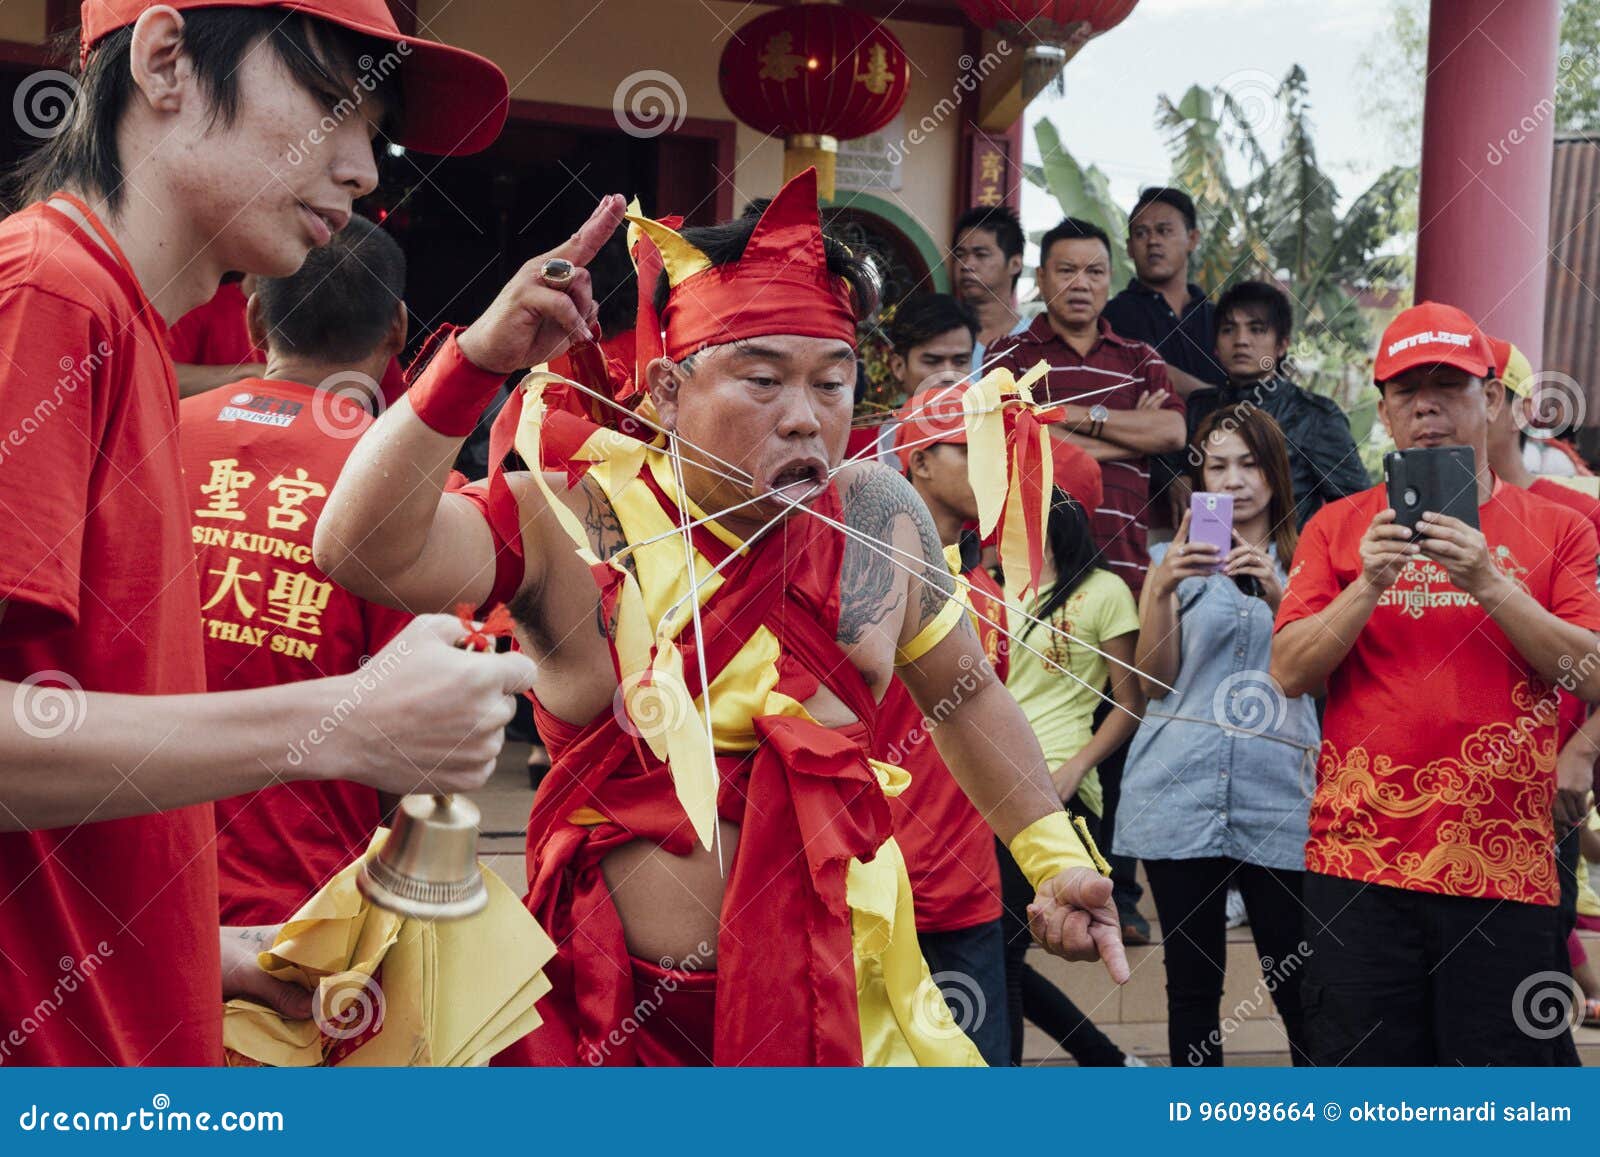 Singkawang Tatung Festival editorial stock image. Image of culture